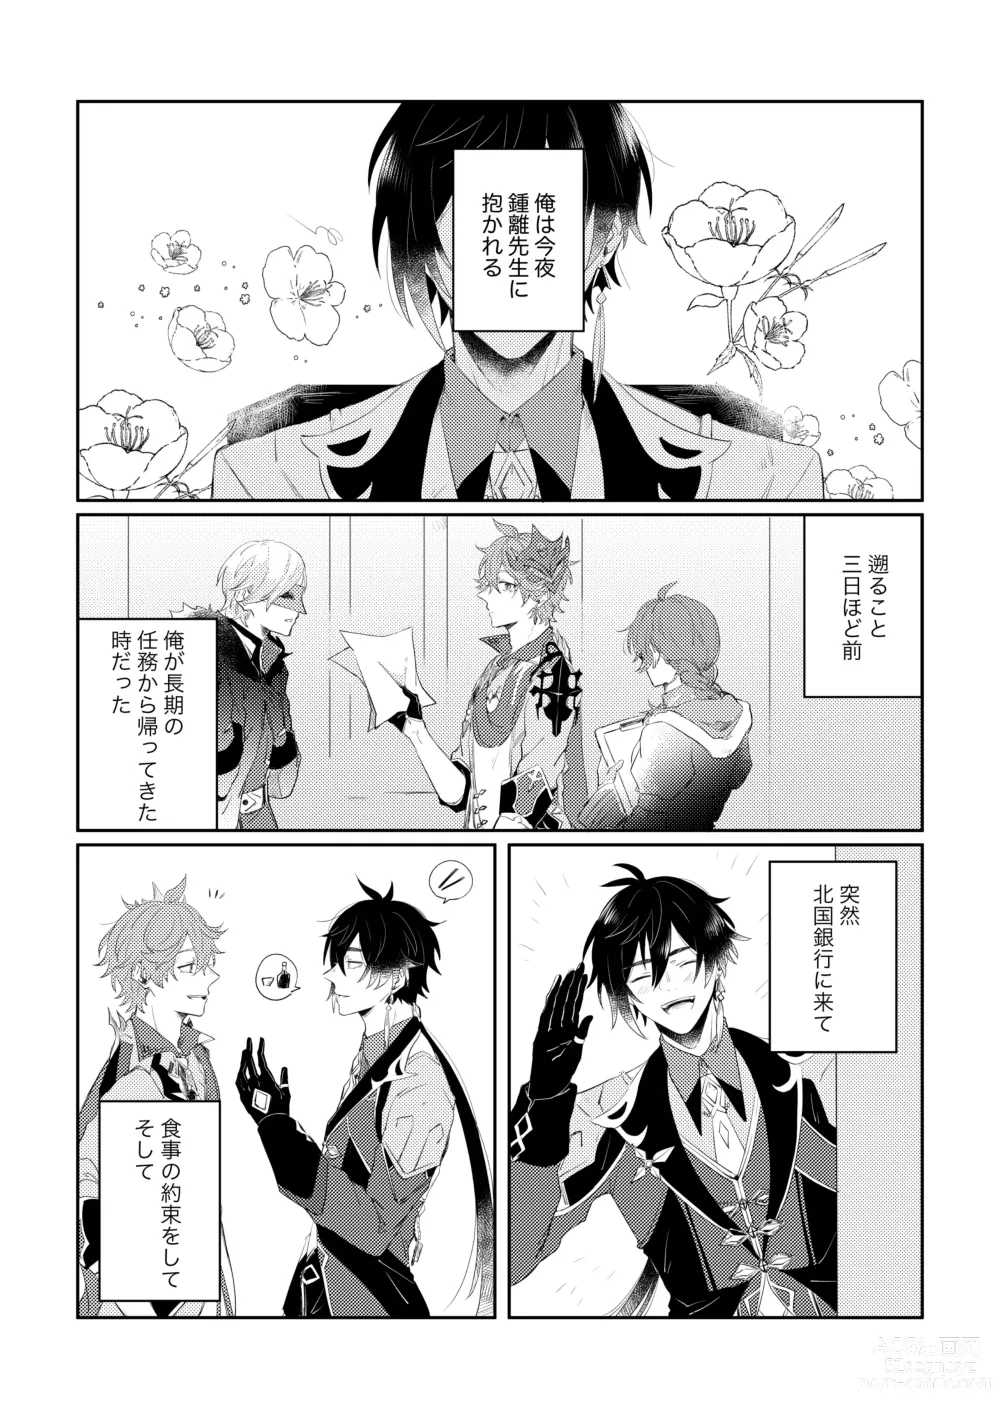 Page 2 of doujinshi Narifuri kamawazu kimini